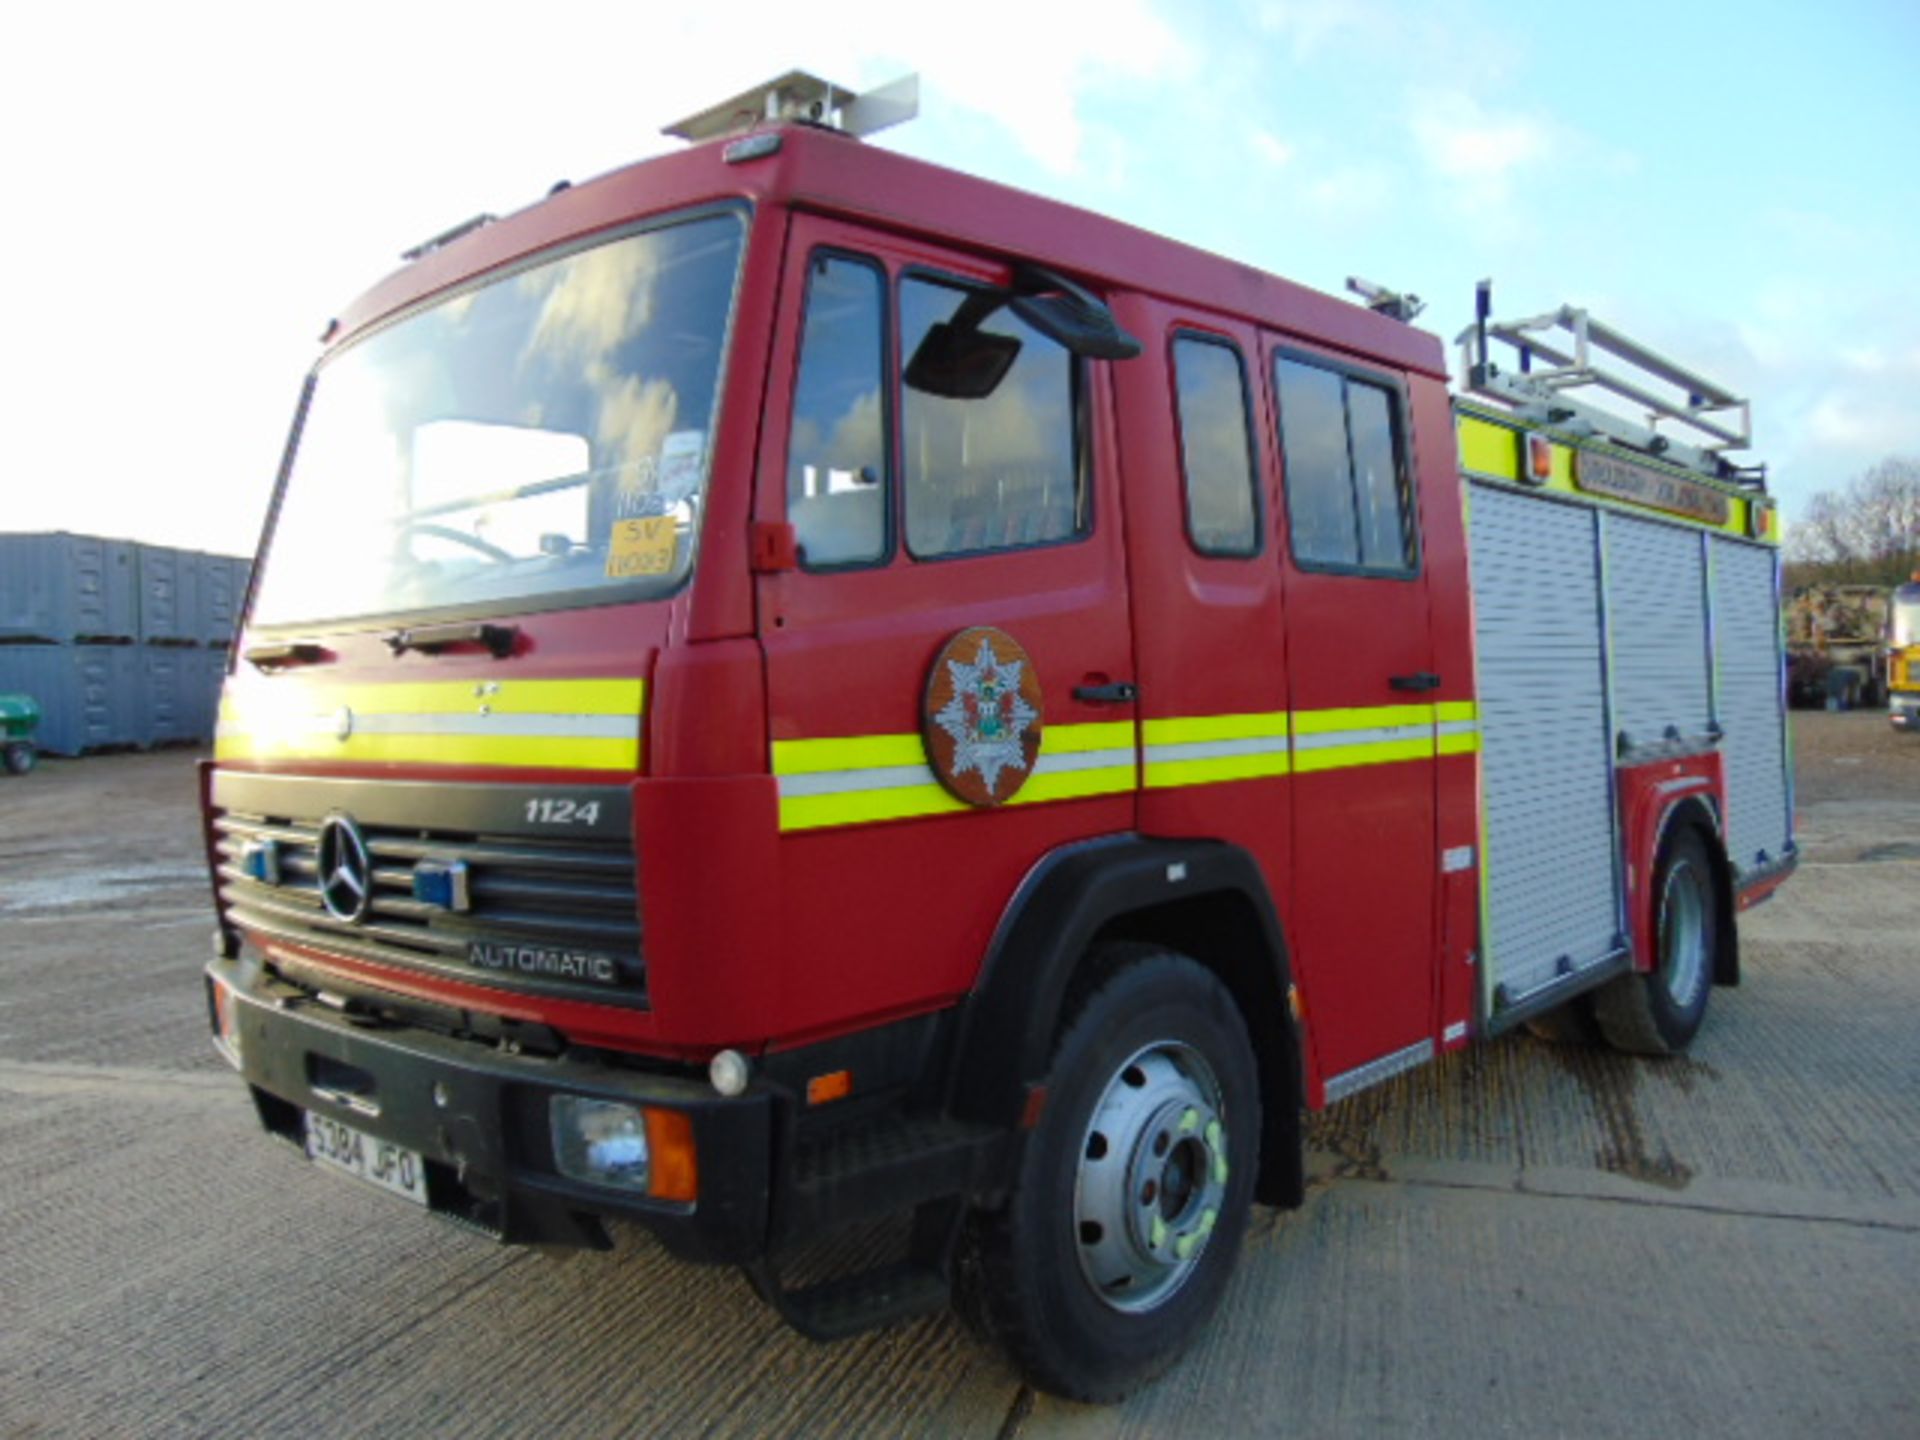 Mercedes 1124 Saxon Fire Engine - Image 3 of 16